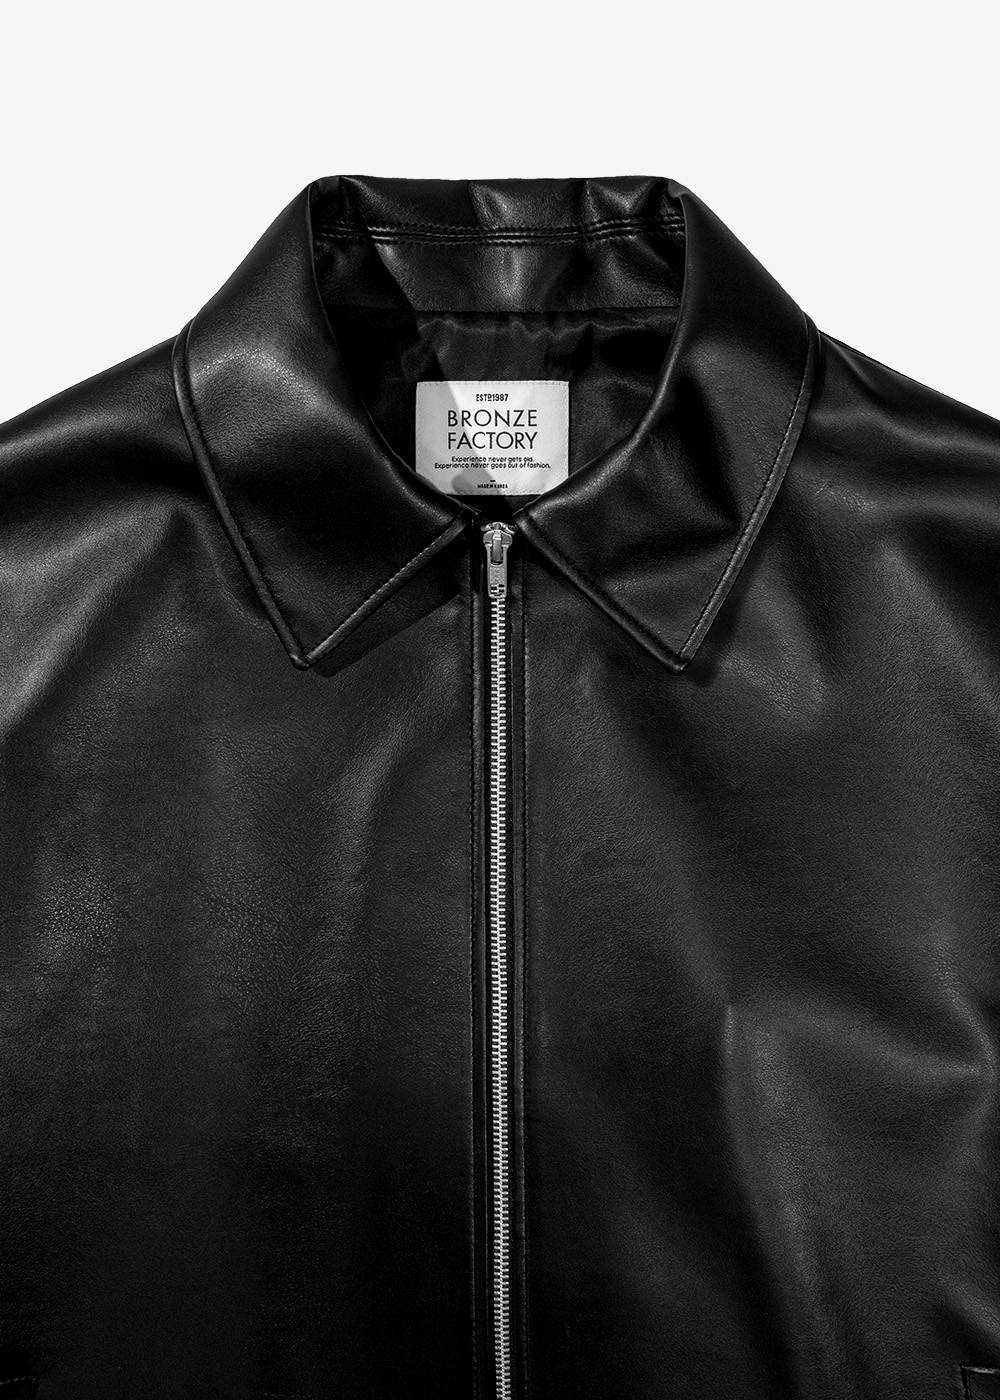 Vegan Leather Single Jacket A2001